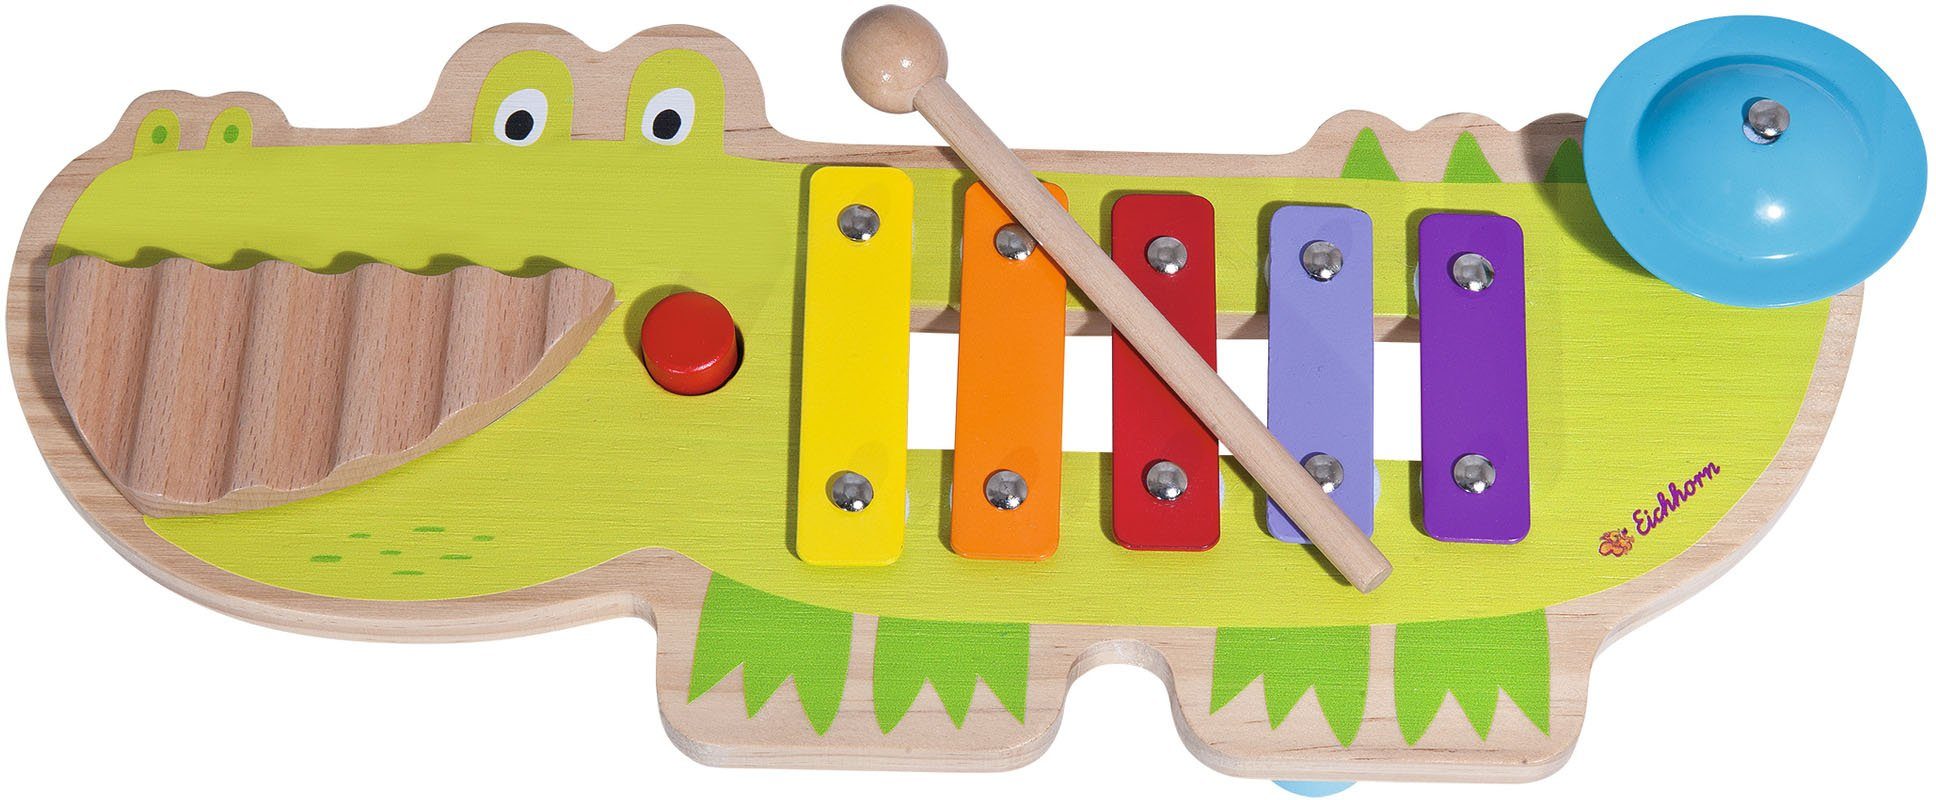 LENBEST Spielzeug-Musikinstrument Rosa Holz Musikinstrument Spielzeug für  Kinder, (25 Stück Musikinstrumente Kinder Set, 25 tlg), Einzigartiges Rosa  Musik Kinderspielzeug mit Xylophon